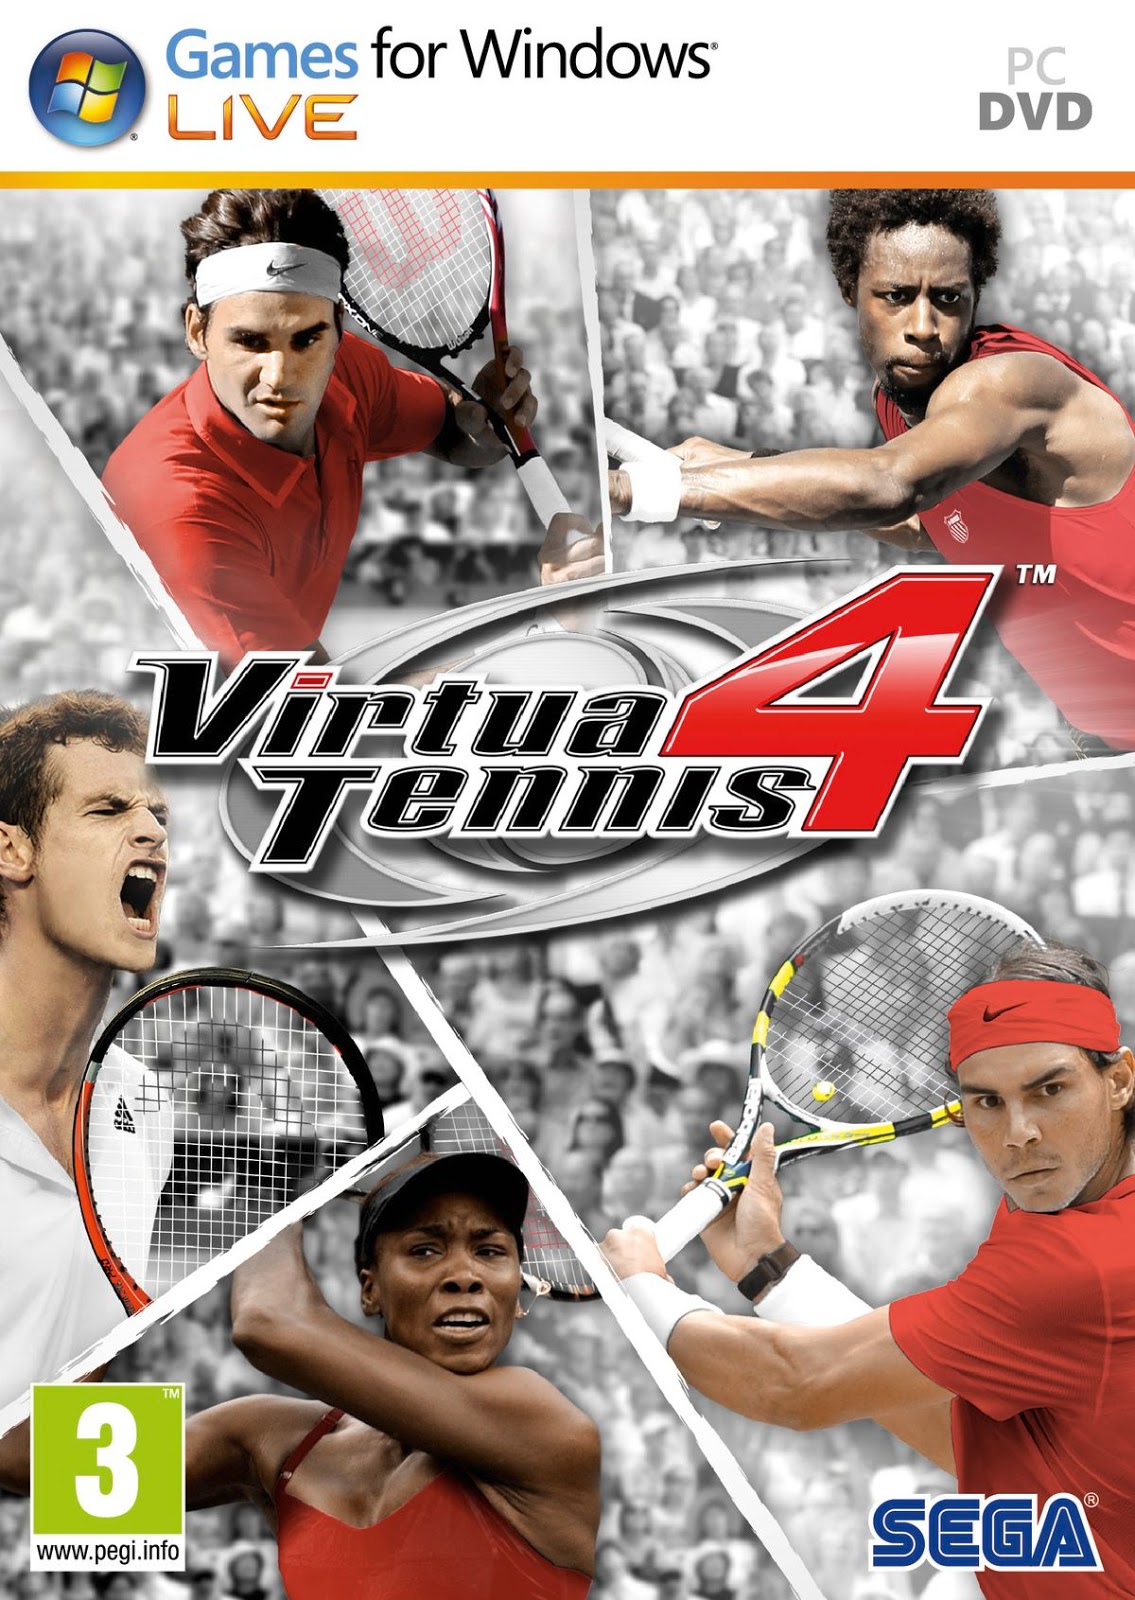 Virtua tennis 5 pc download